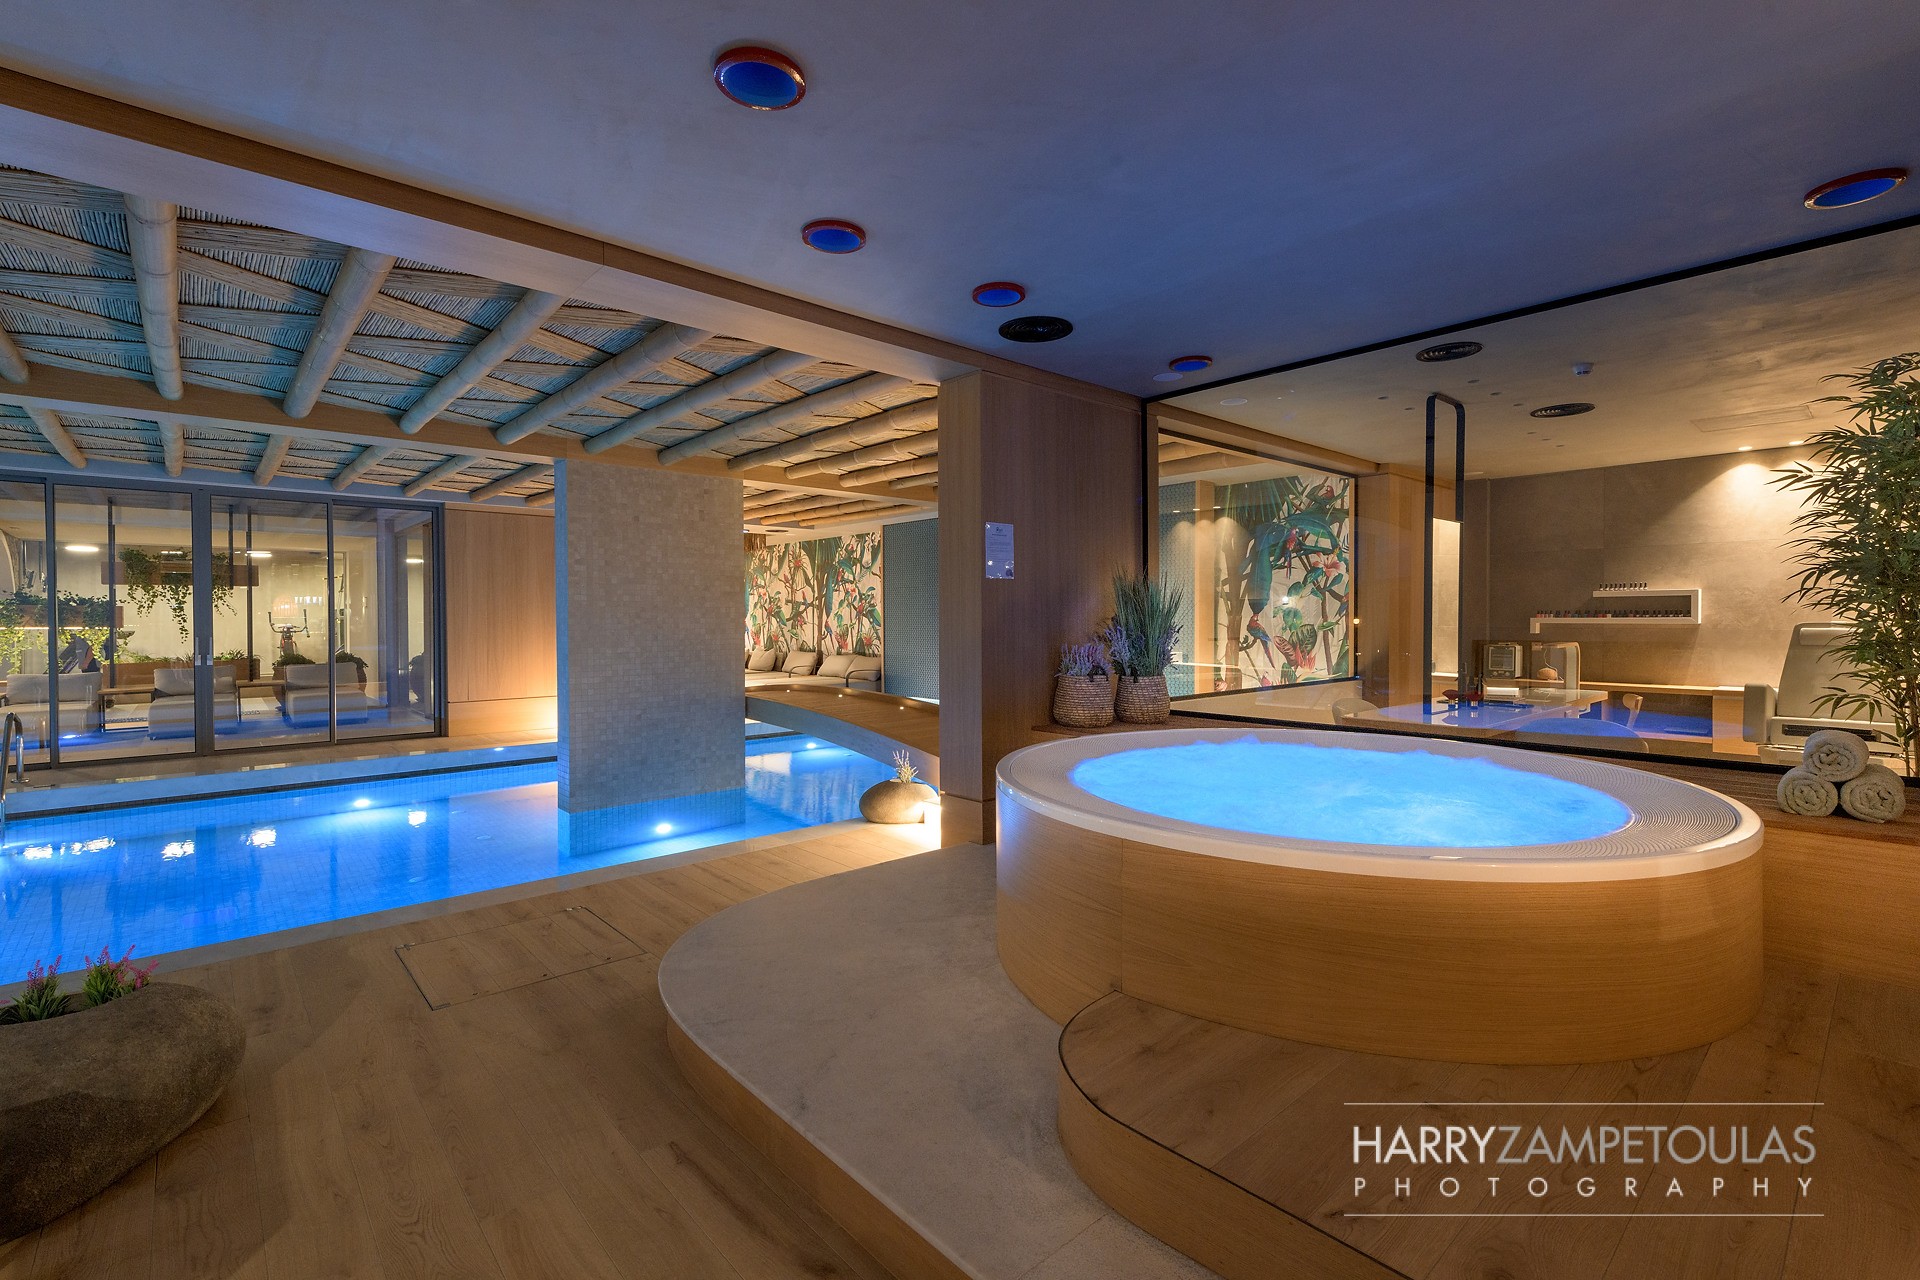 SPA-Pool-Night-2 Porto Angeli Resort Hotel - Hotel Photography Harry Zampetoulas 